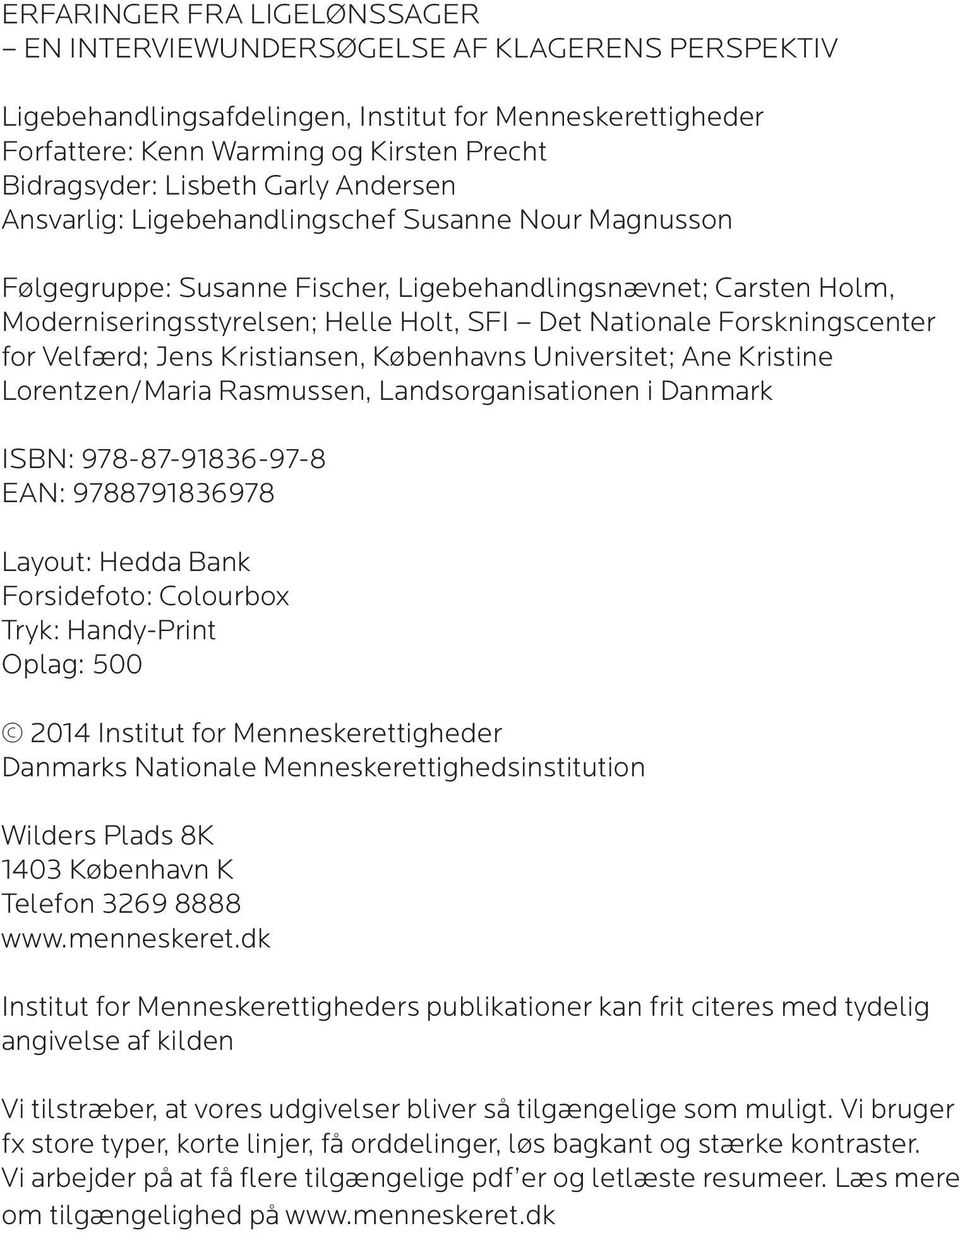 Forskningscenter for Velfærd; Jens Kristiansen, Københavns Universitet; Ane Kristine Lorentzen/Maria Rasmussen, Landsorganisationen i Danmark ISBN: 978-87-91836-97-8 EAN: 9788791836978 Layout: Hedda